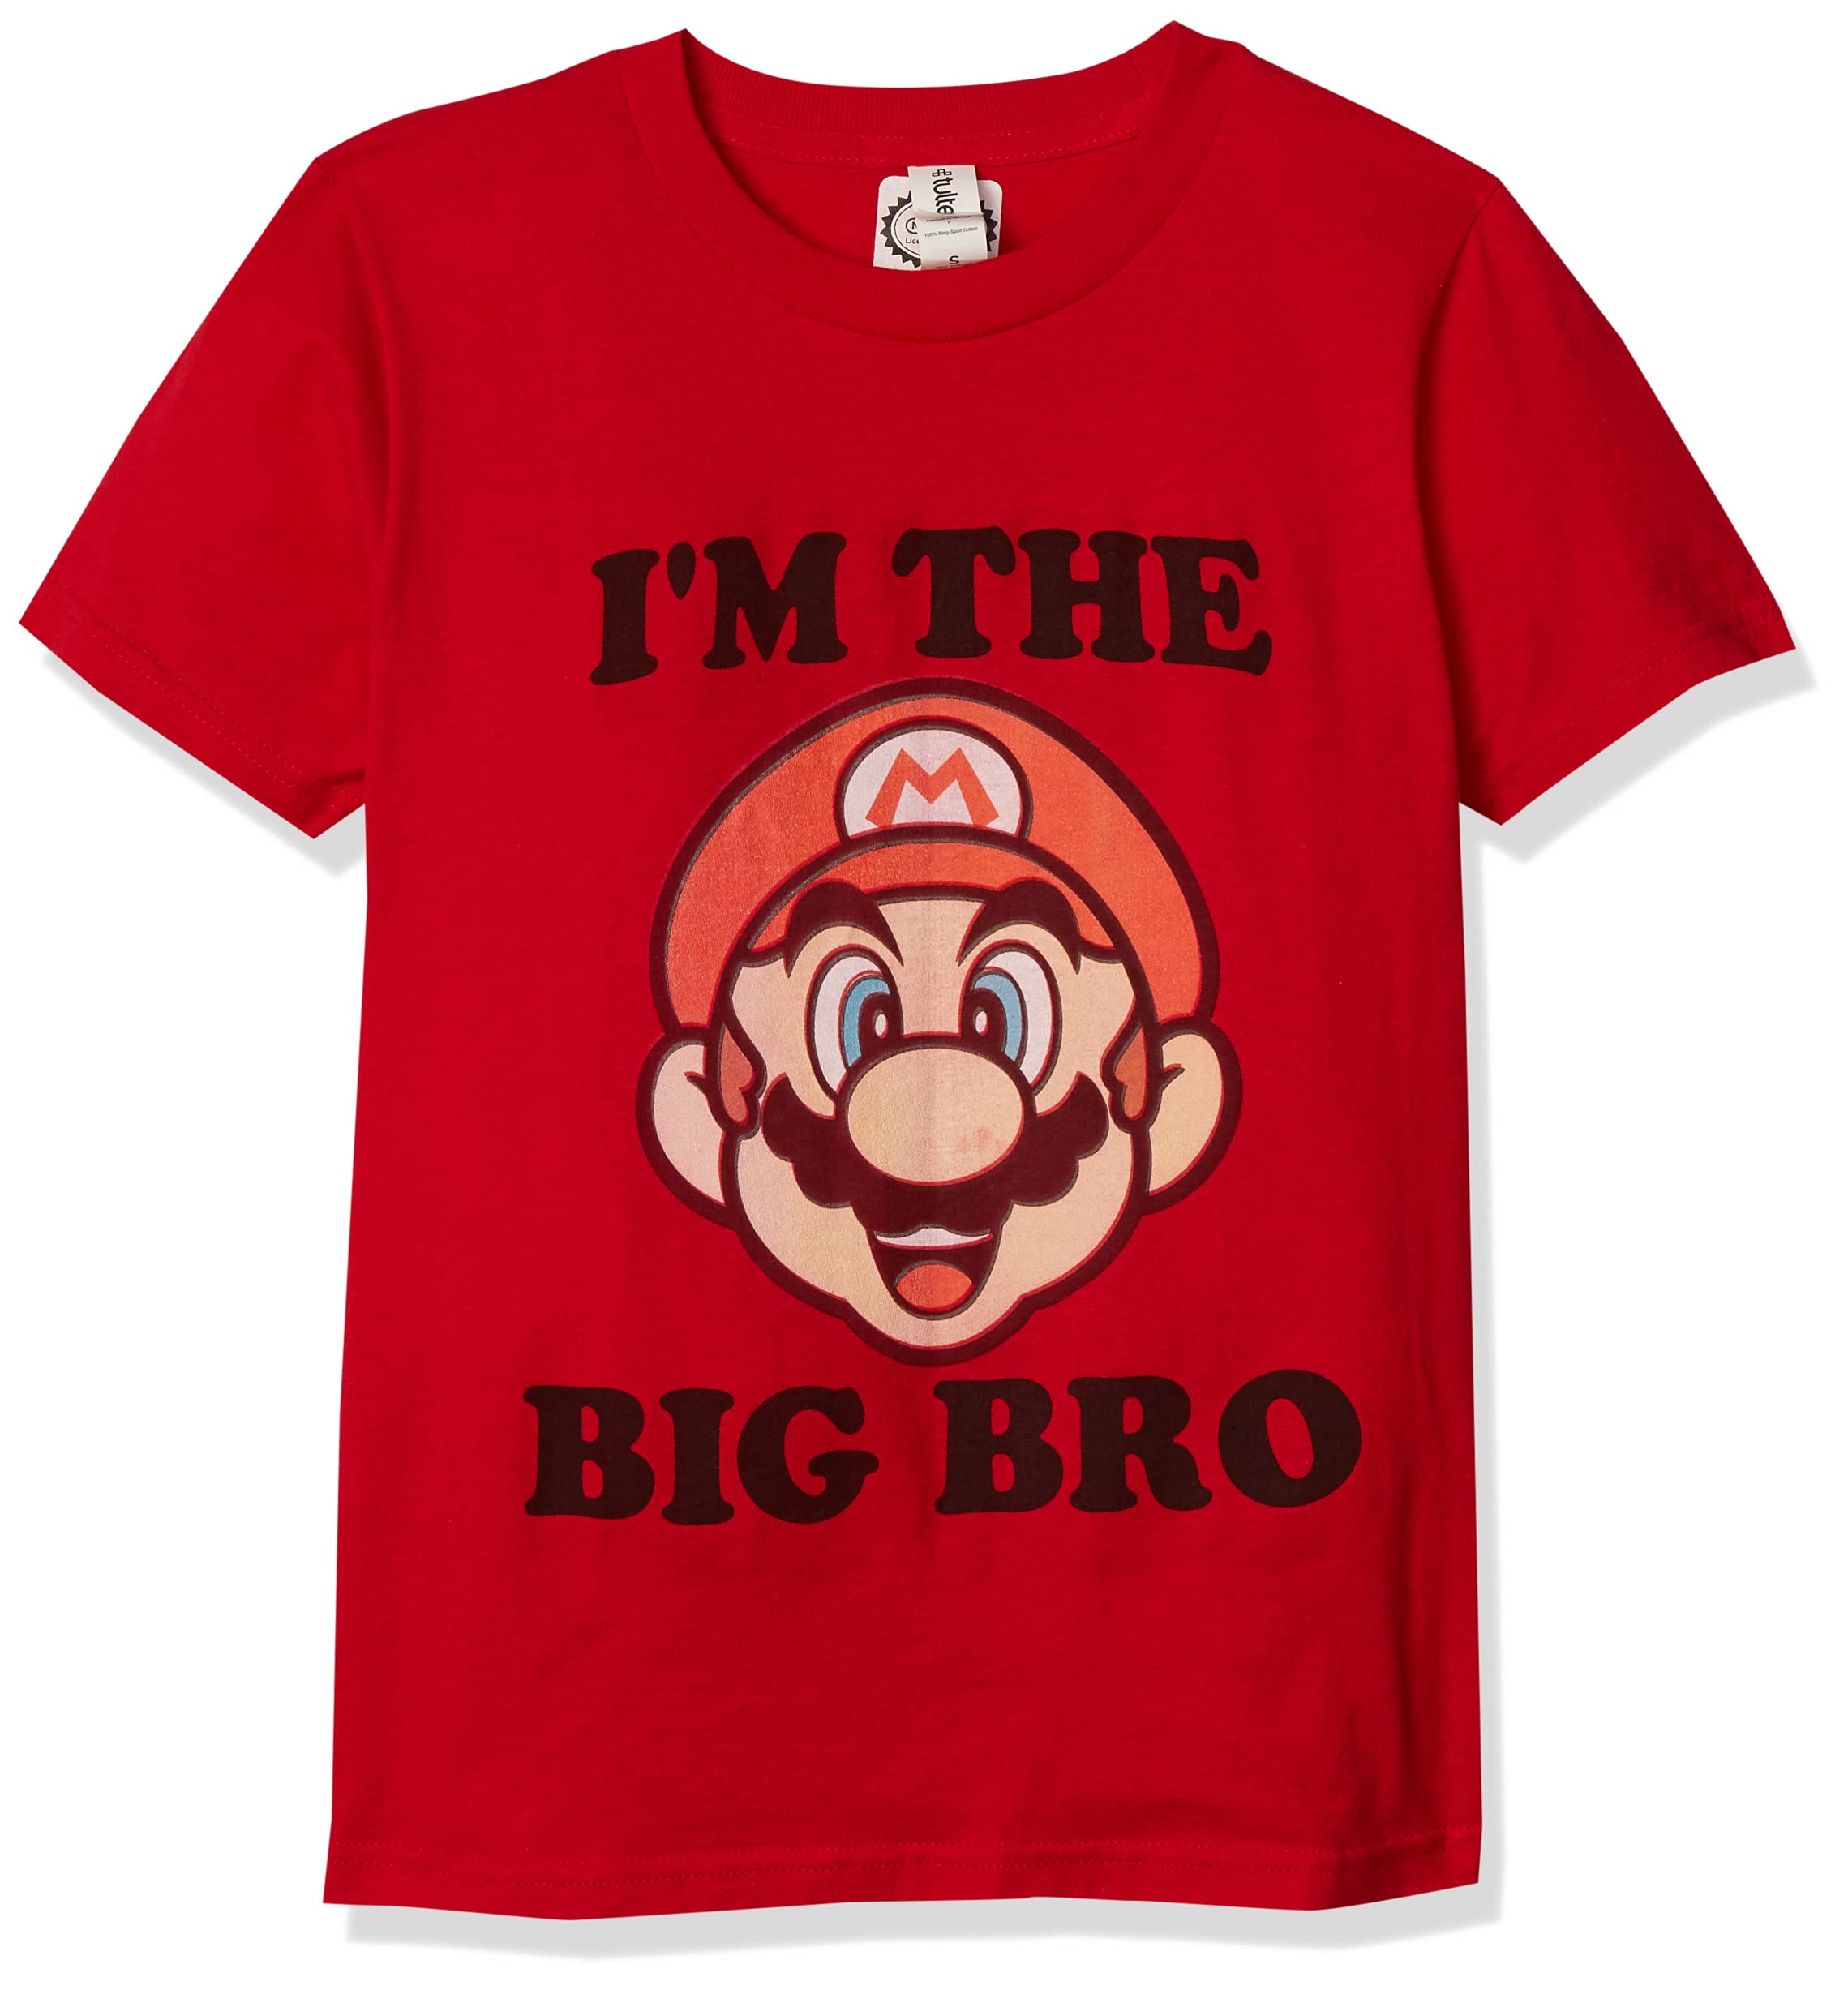 Nintendo boys Nintendo Boys' Big Bro Graphic T-shirt